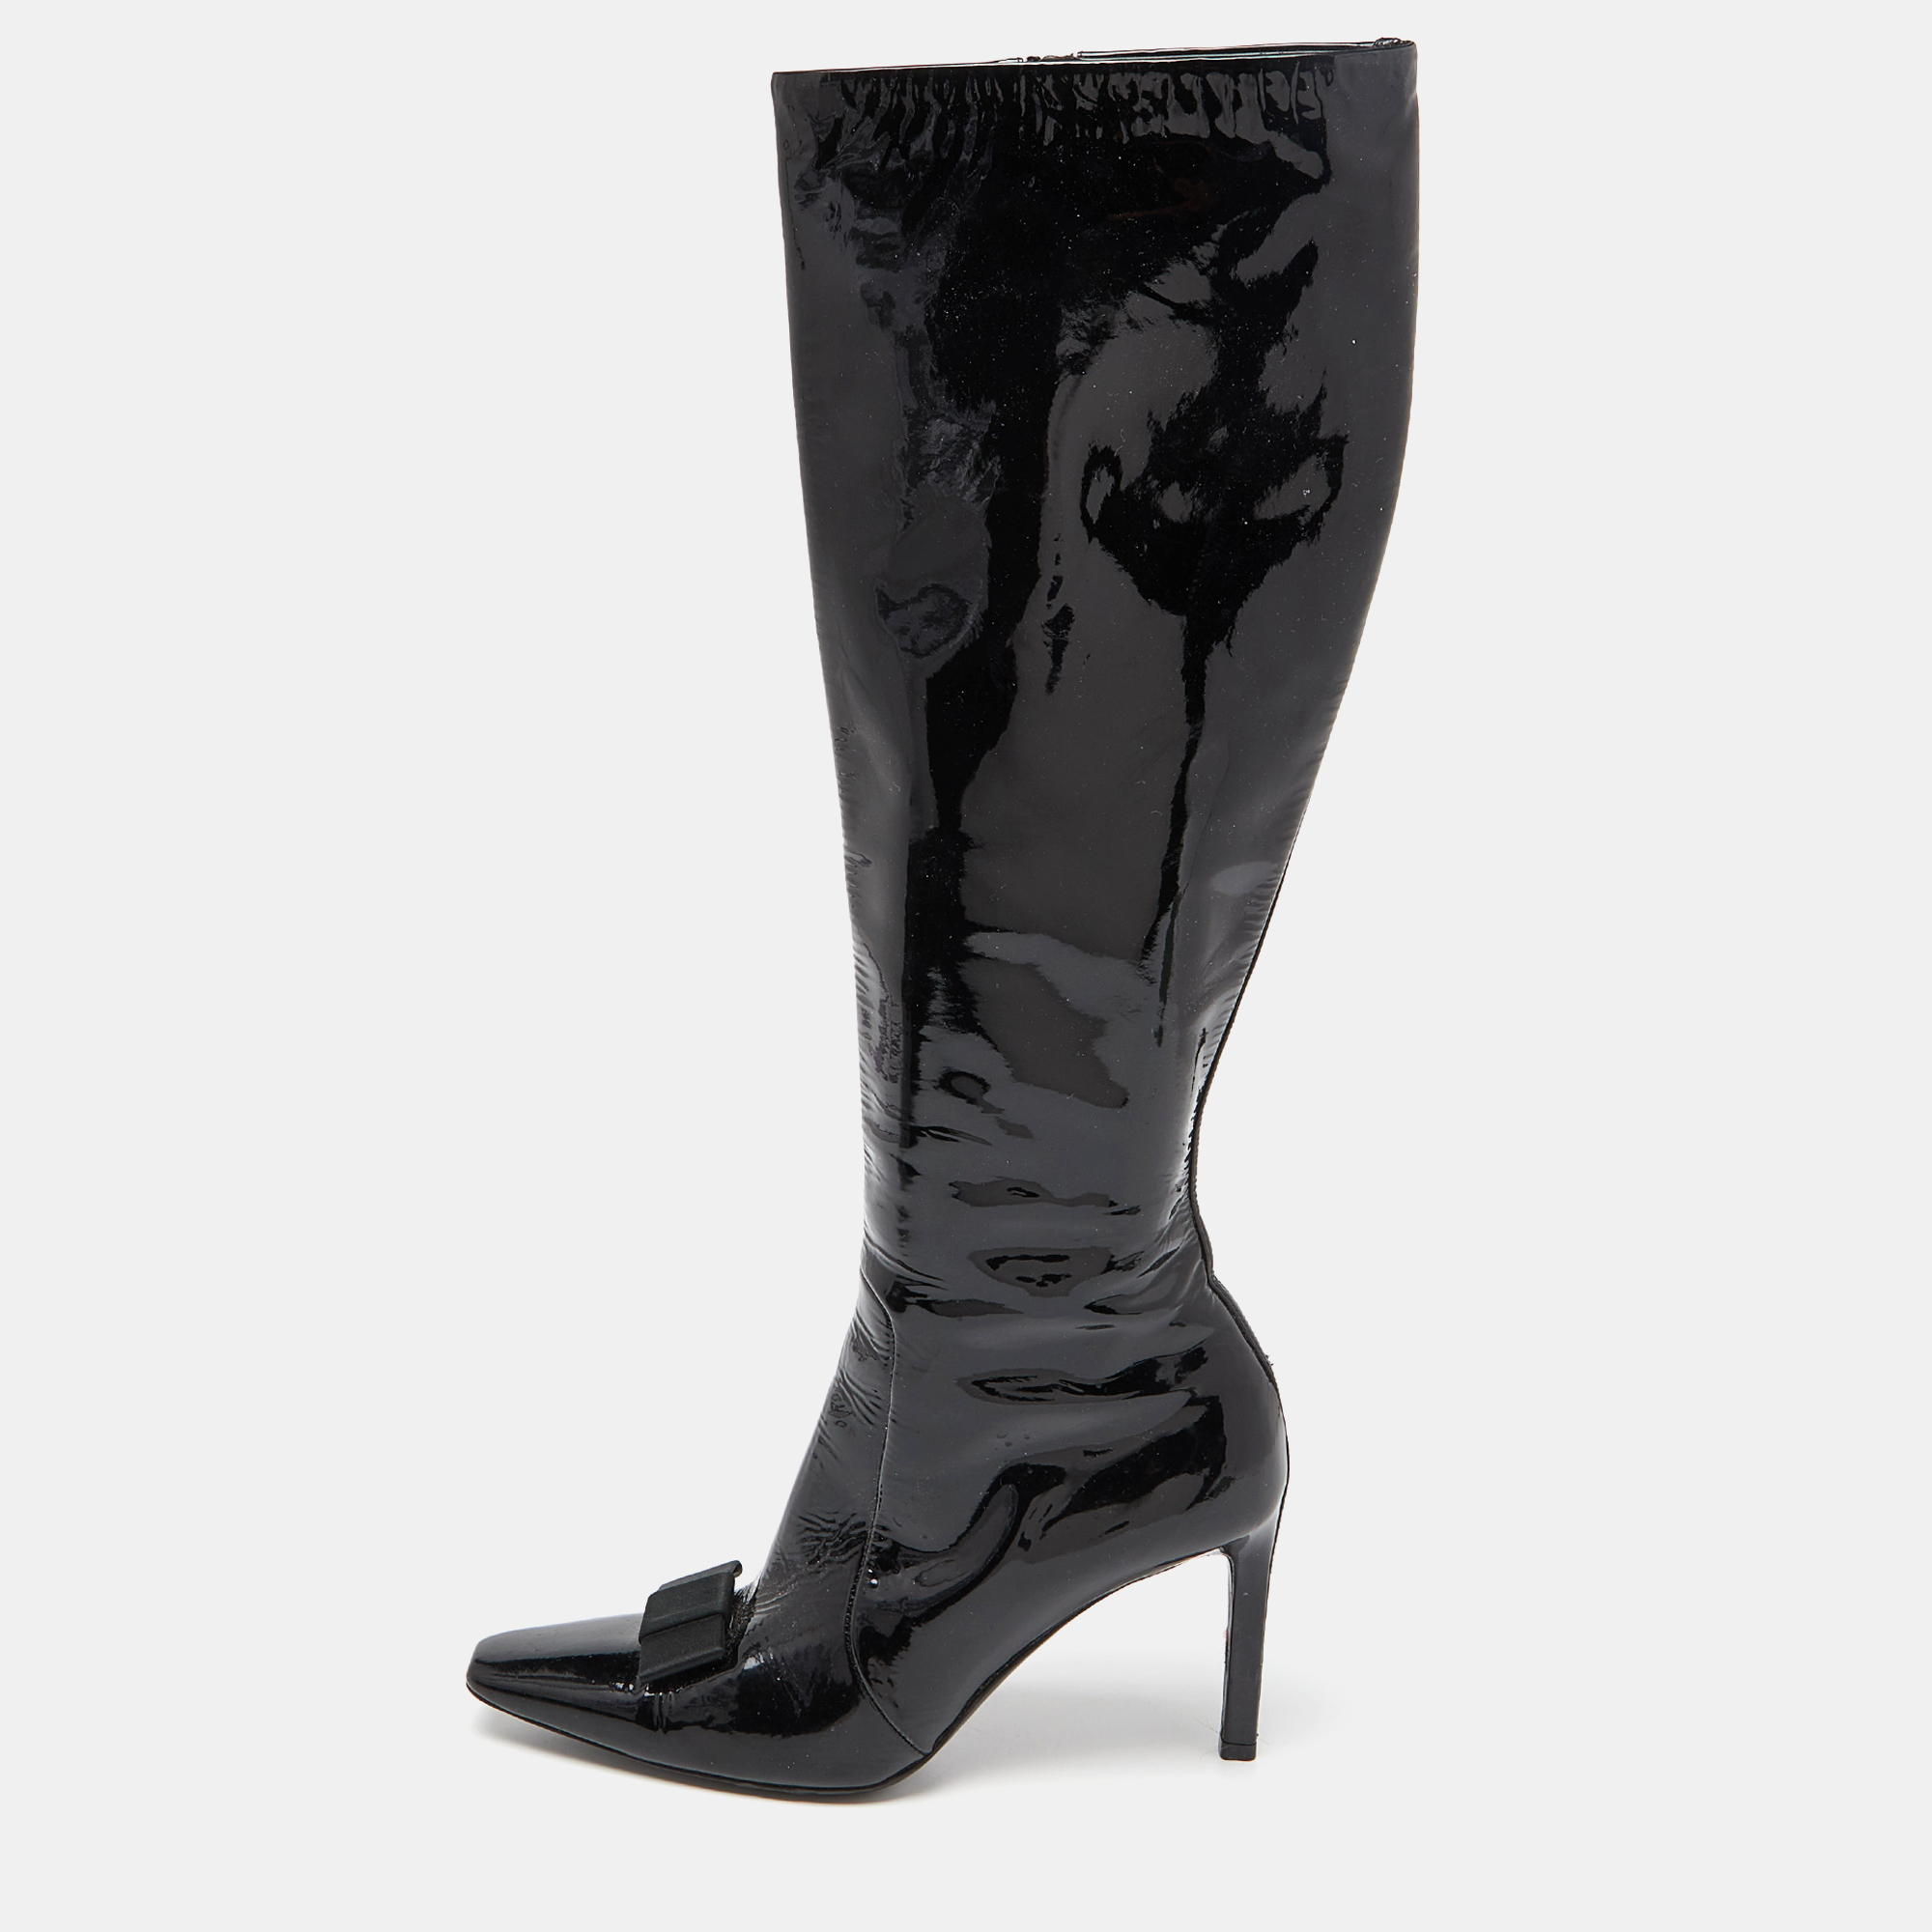 Balenciaga black patent leather bow calf length boots size 36